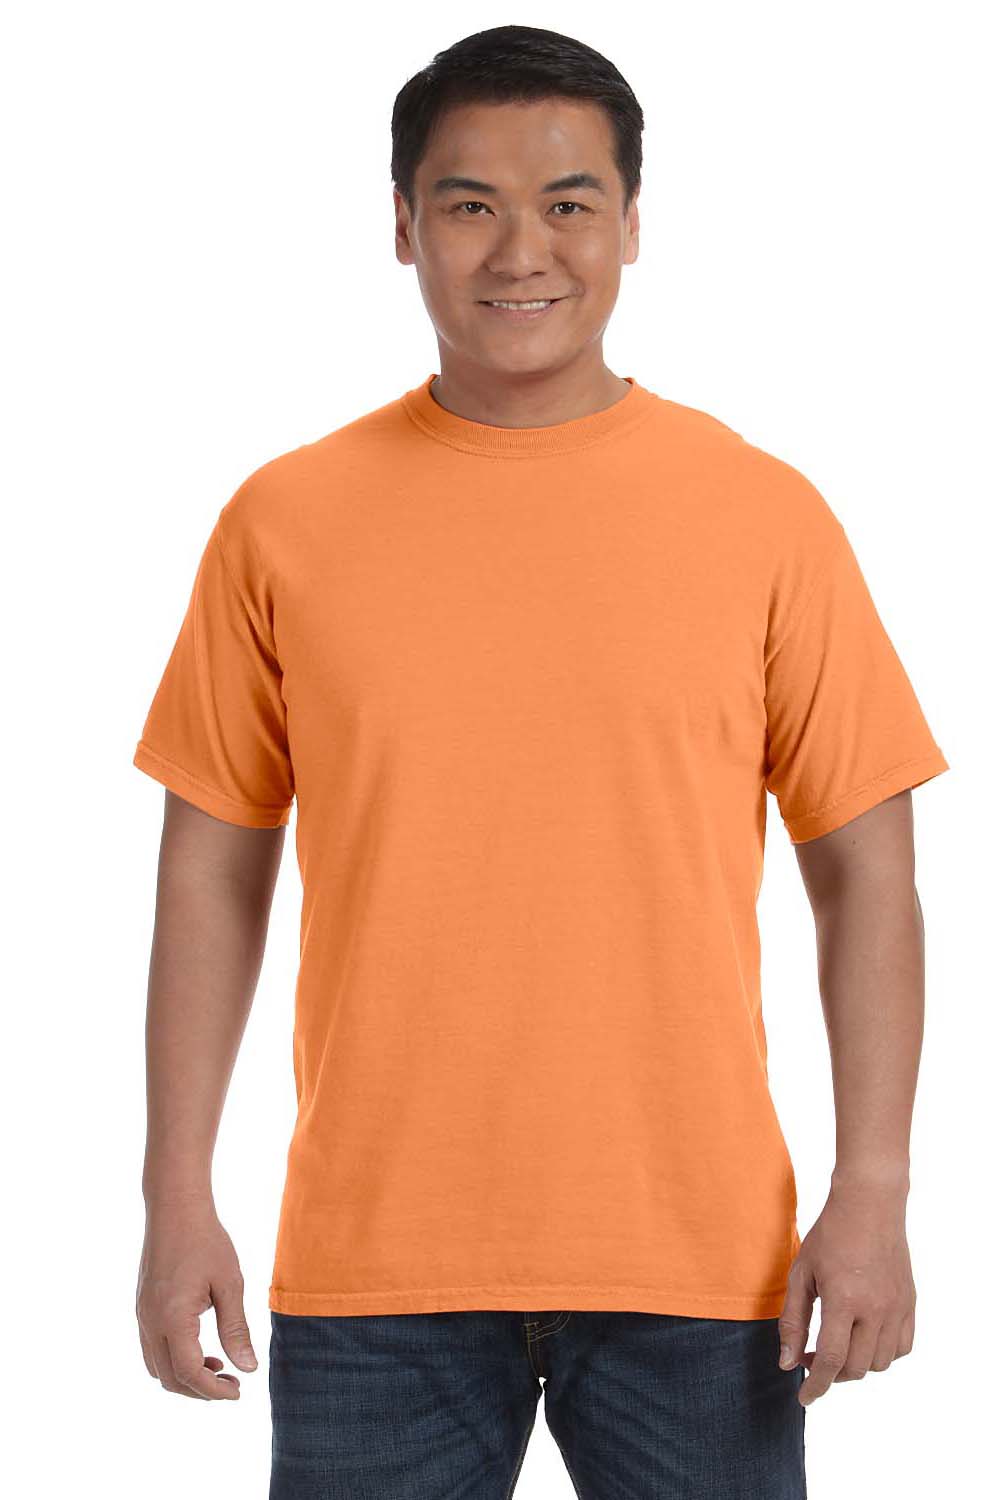 Comfort Colors C1717 Mens Short Sleeve Crewneck T-Shirt Melon Orange Front